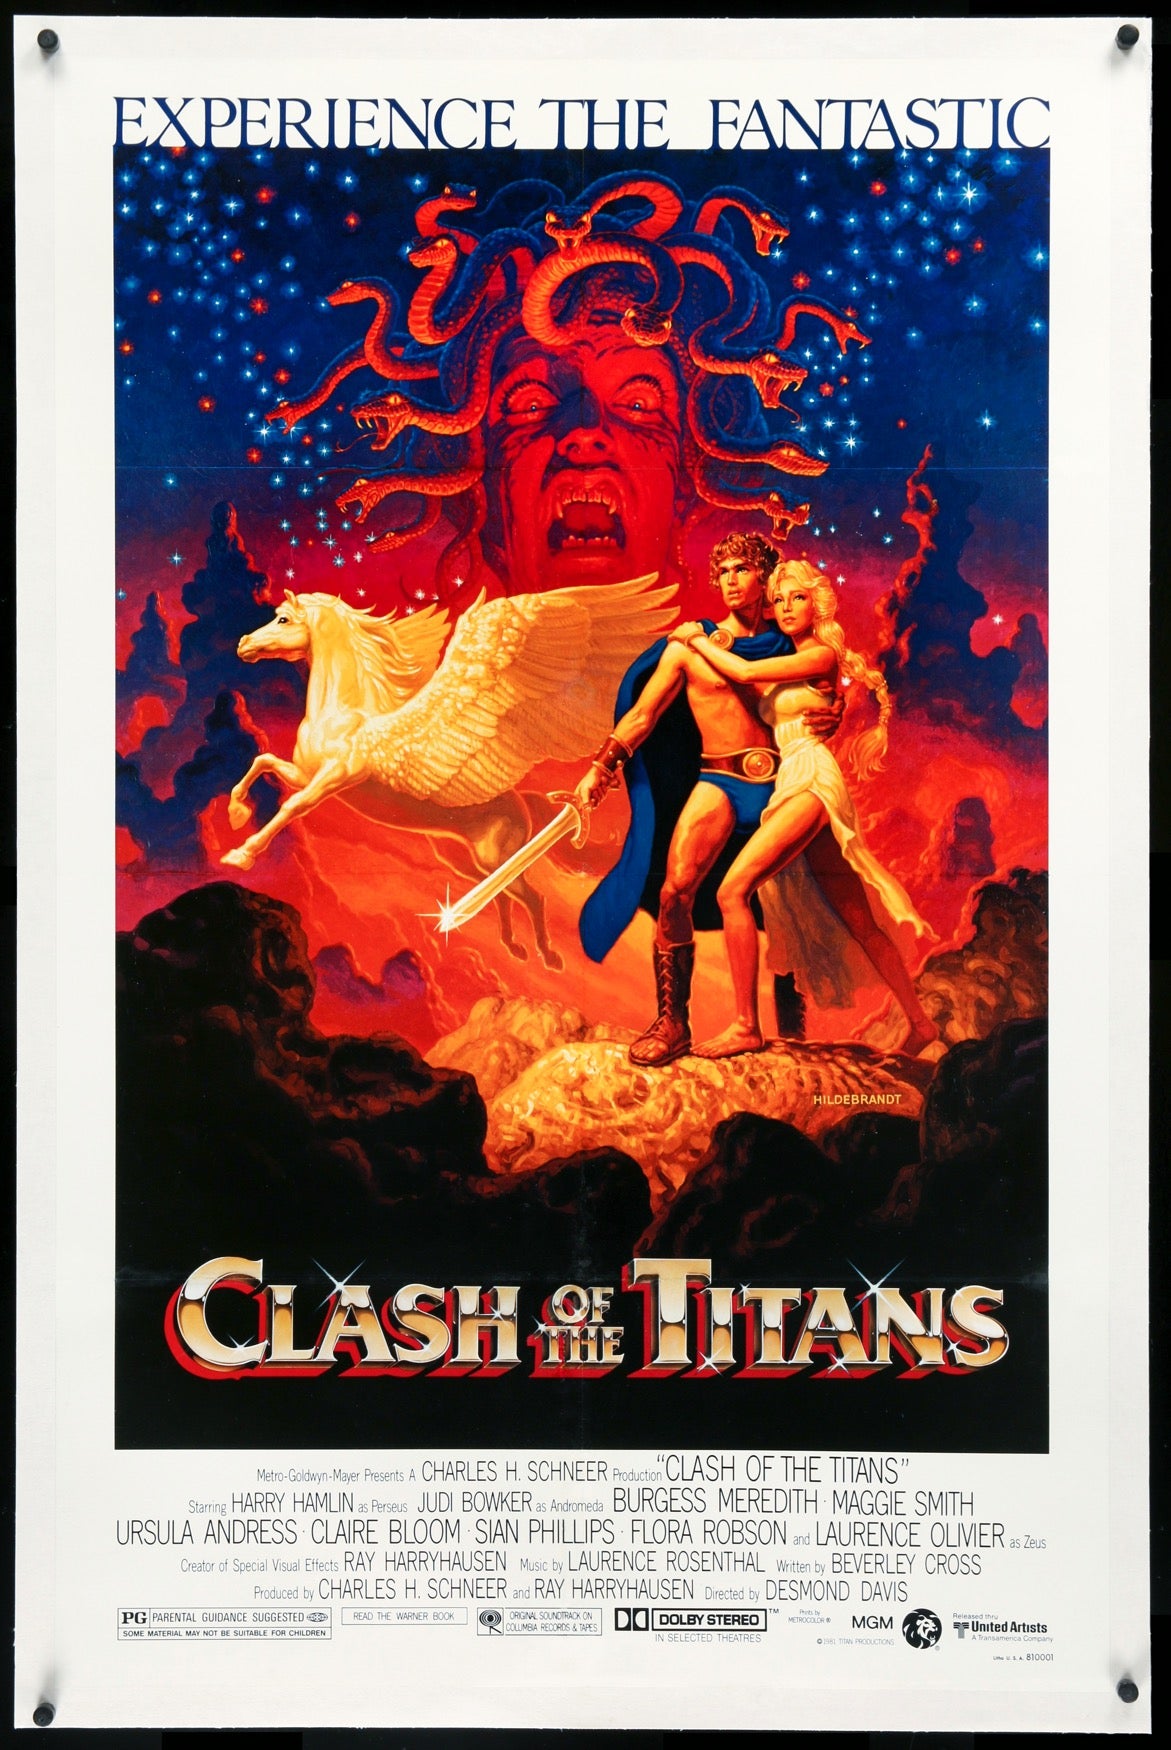 Original Clash Of The Titans (1981) movie poster in C8 condition for $300.00